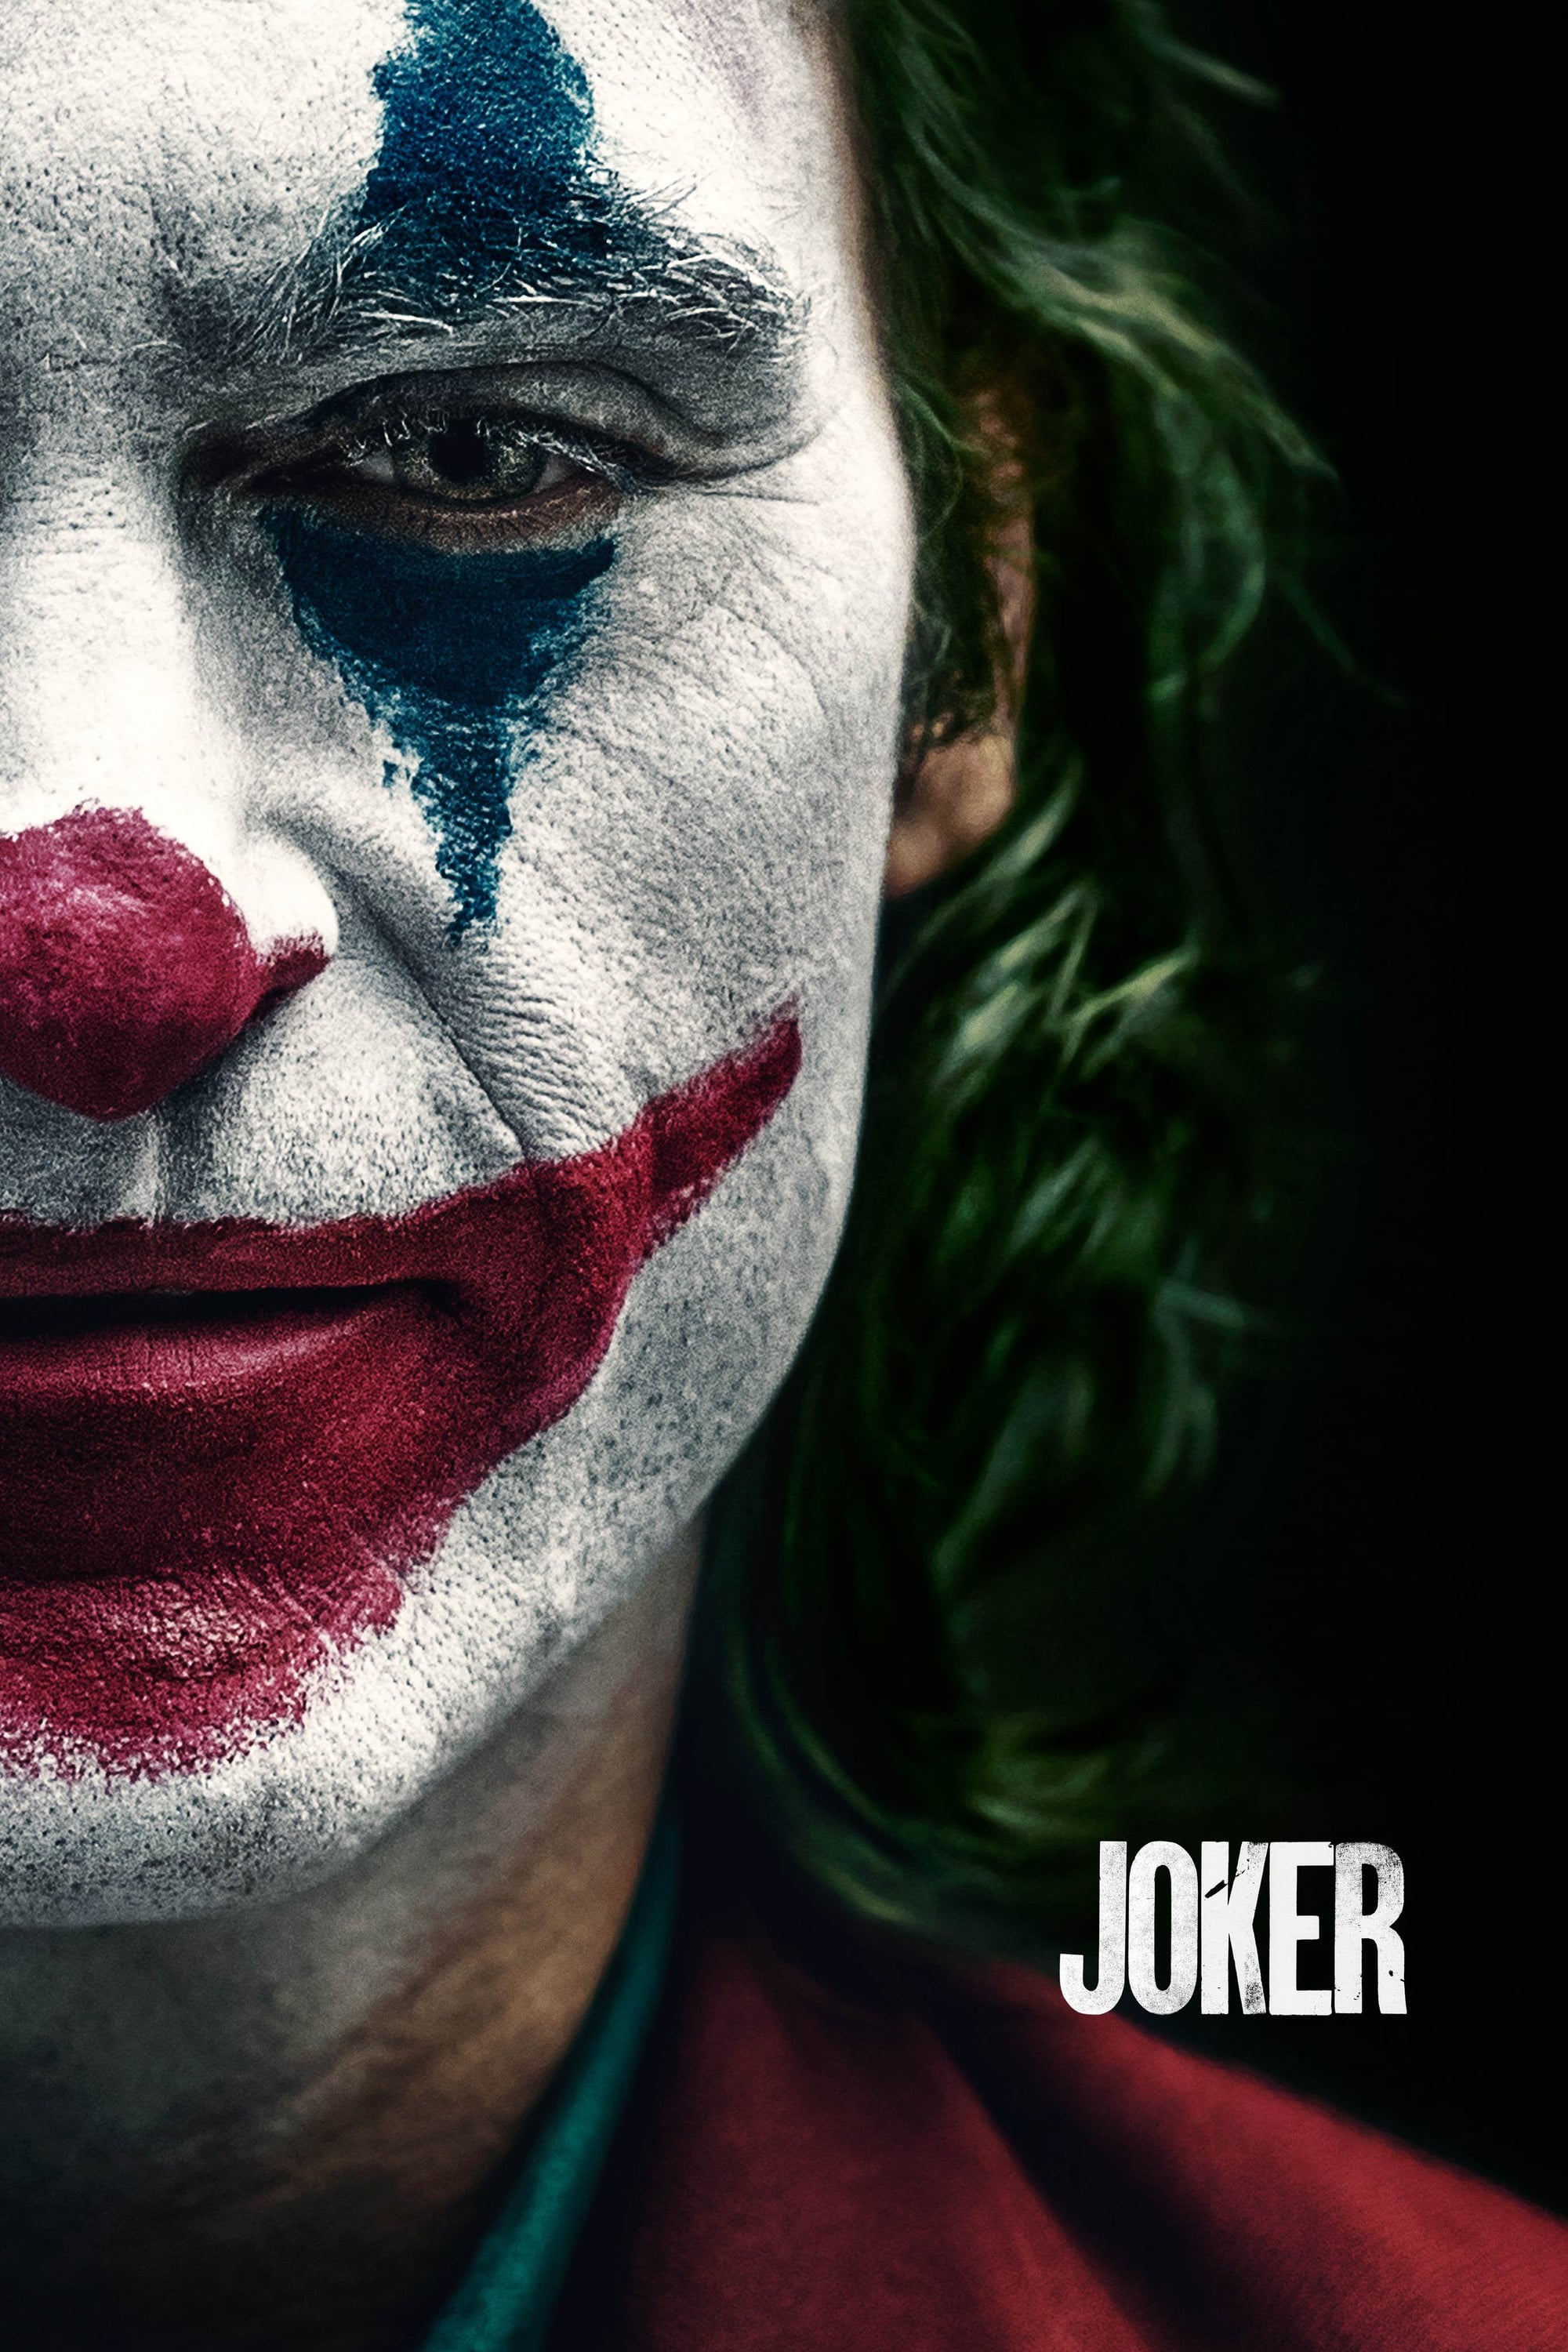 Joker โจ๊กเกอร์ (2019)